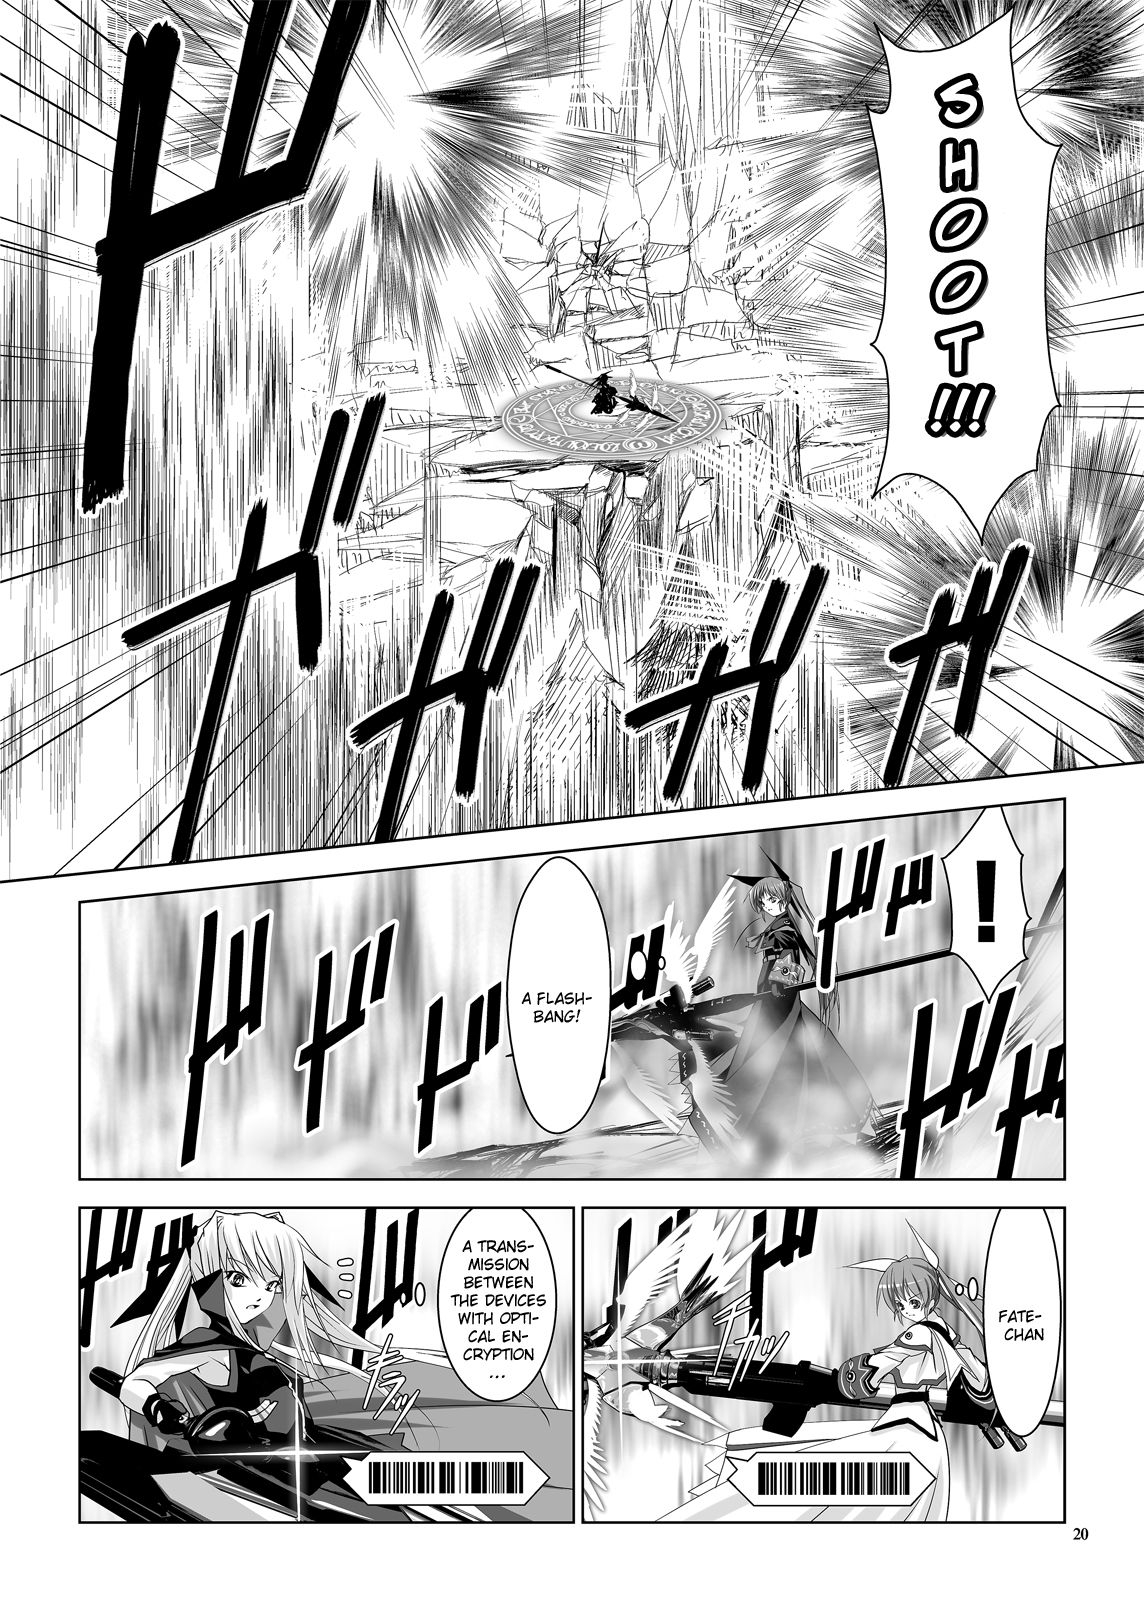 [$1 (TOM)] Mahou Shoujo Lyrical Nanoha - Another Crisis #3 [A Part] (Mahou Shoujo Lyrical Nanoha) [English] 19